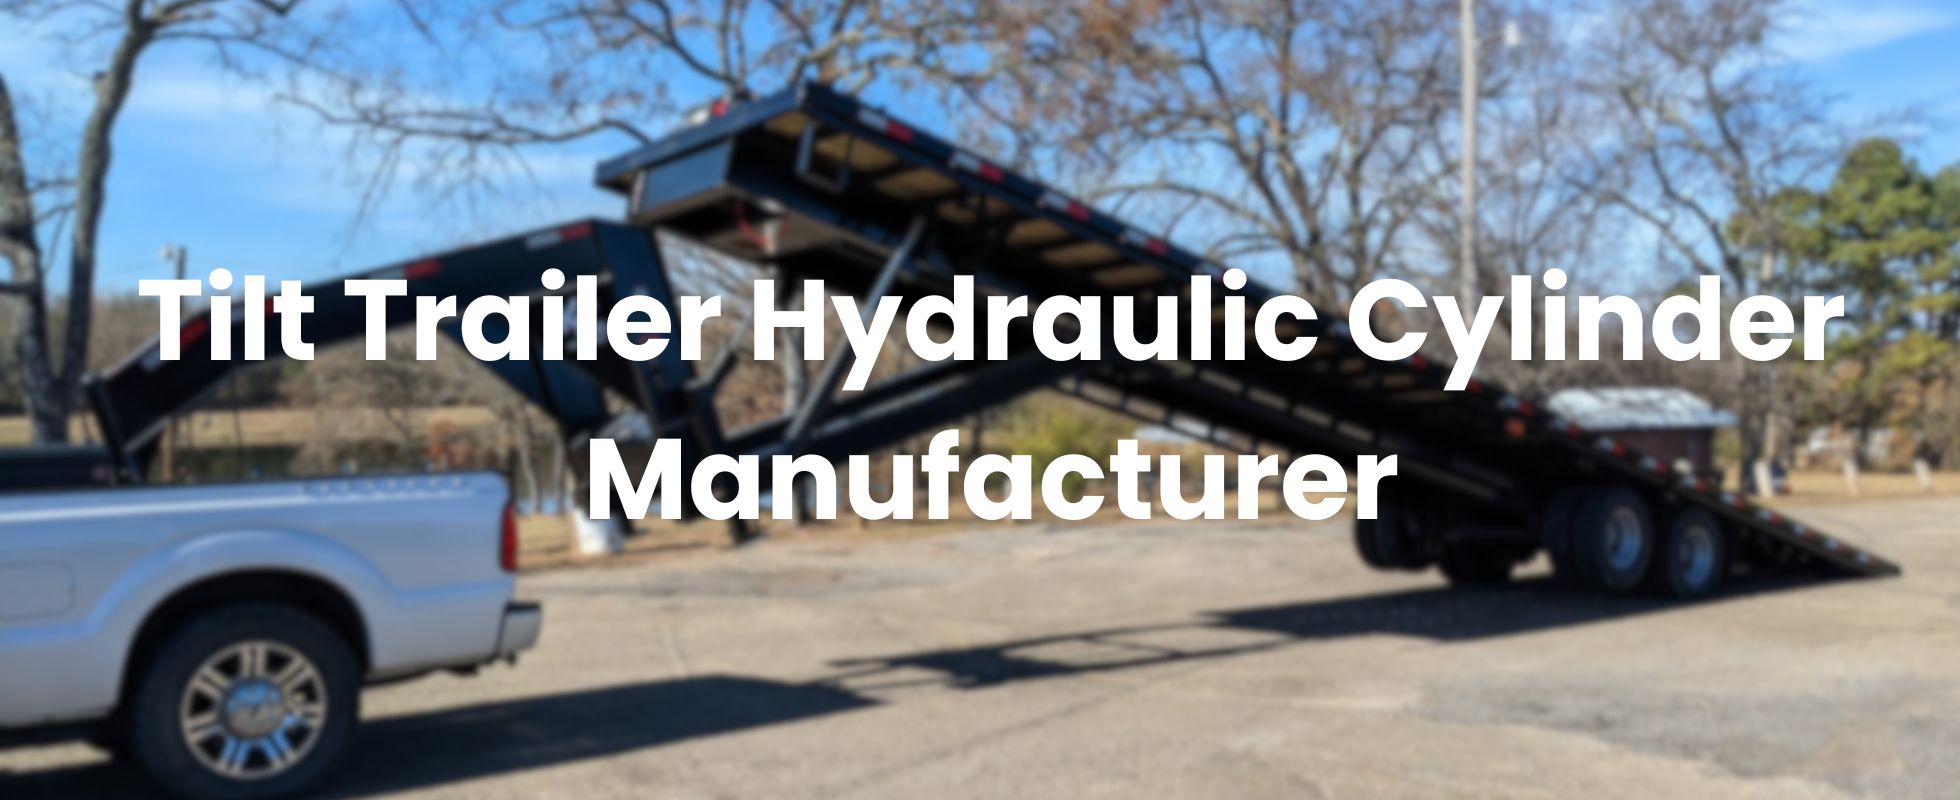 Tilt Trailer Hydraulic Cylinder Manufacturer Banner Topa